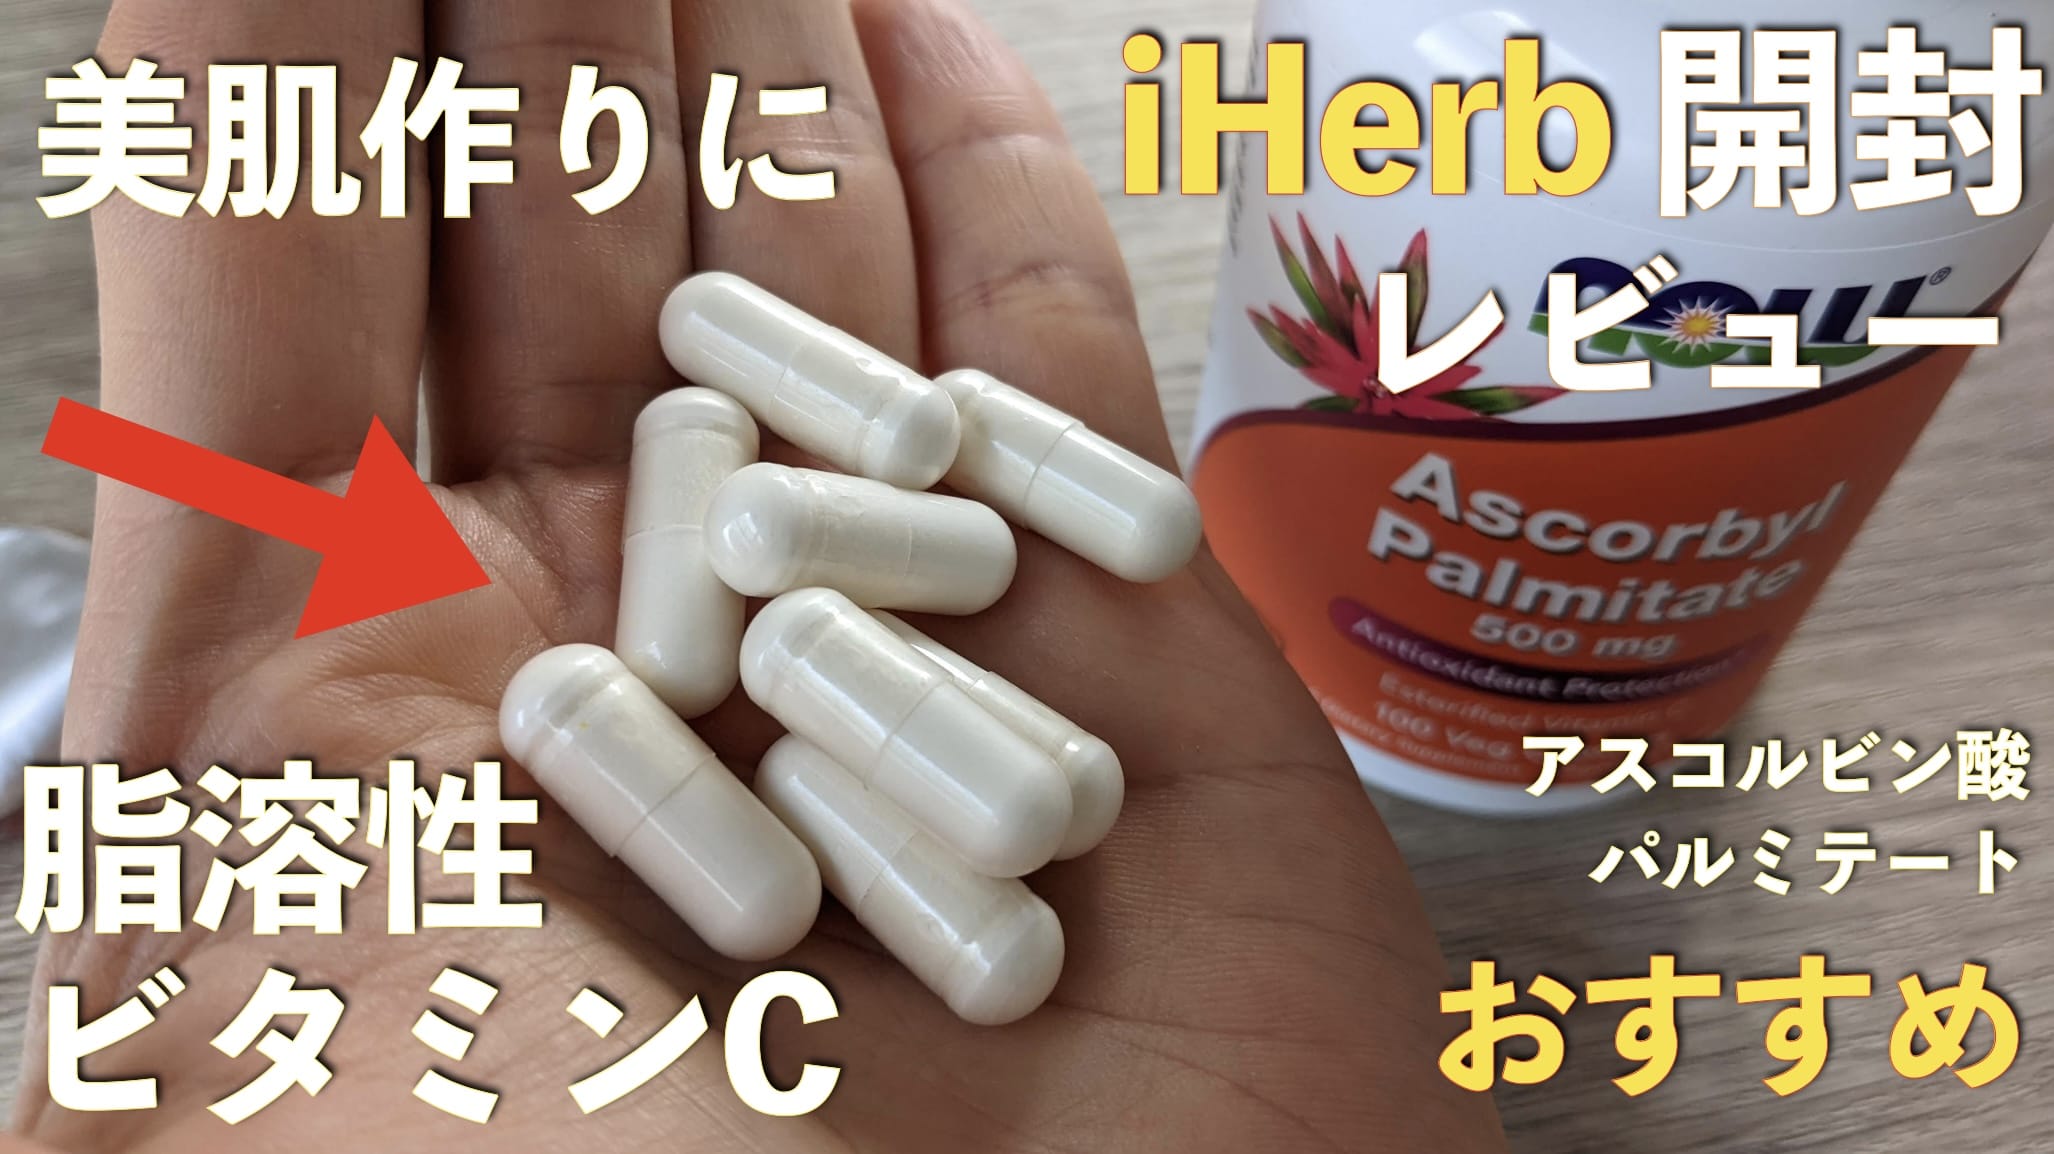 【iHerb】脂溶性ビタミンCアスコルビン酸パルミテート買ってみたので開封レビューサムネイル画像